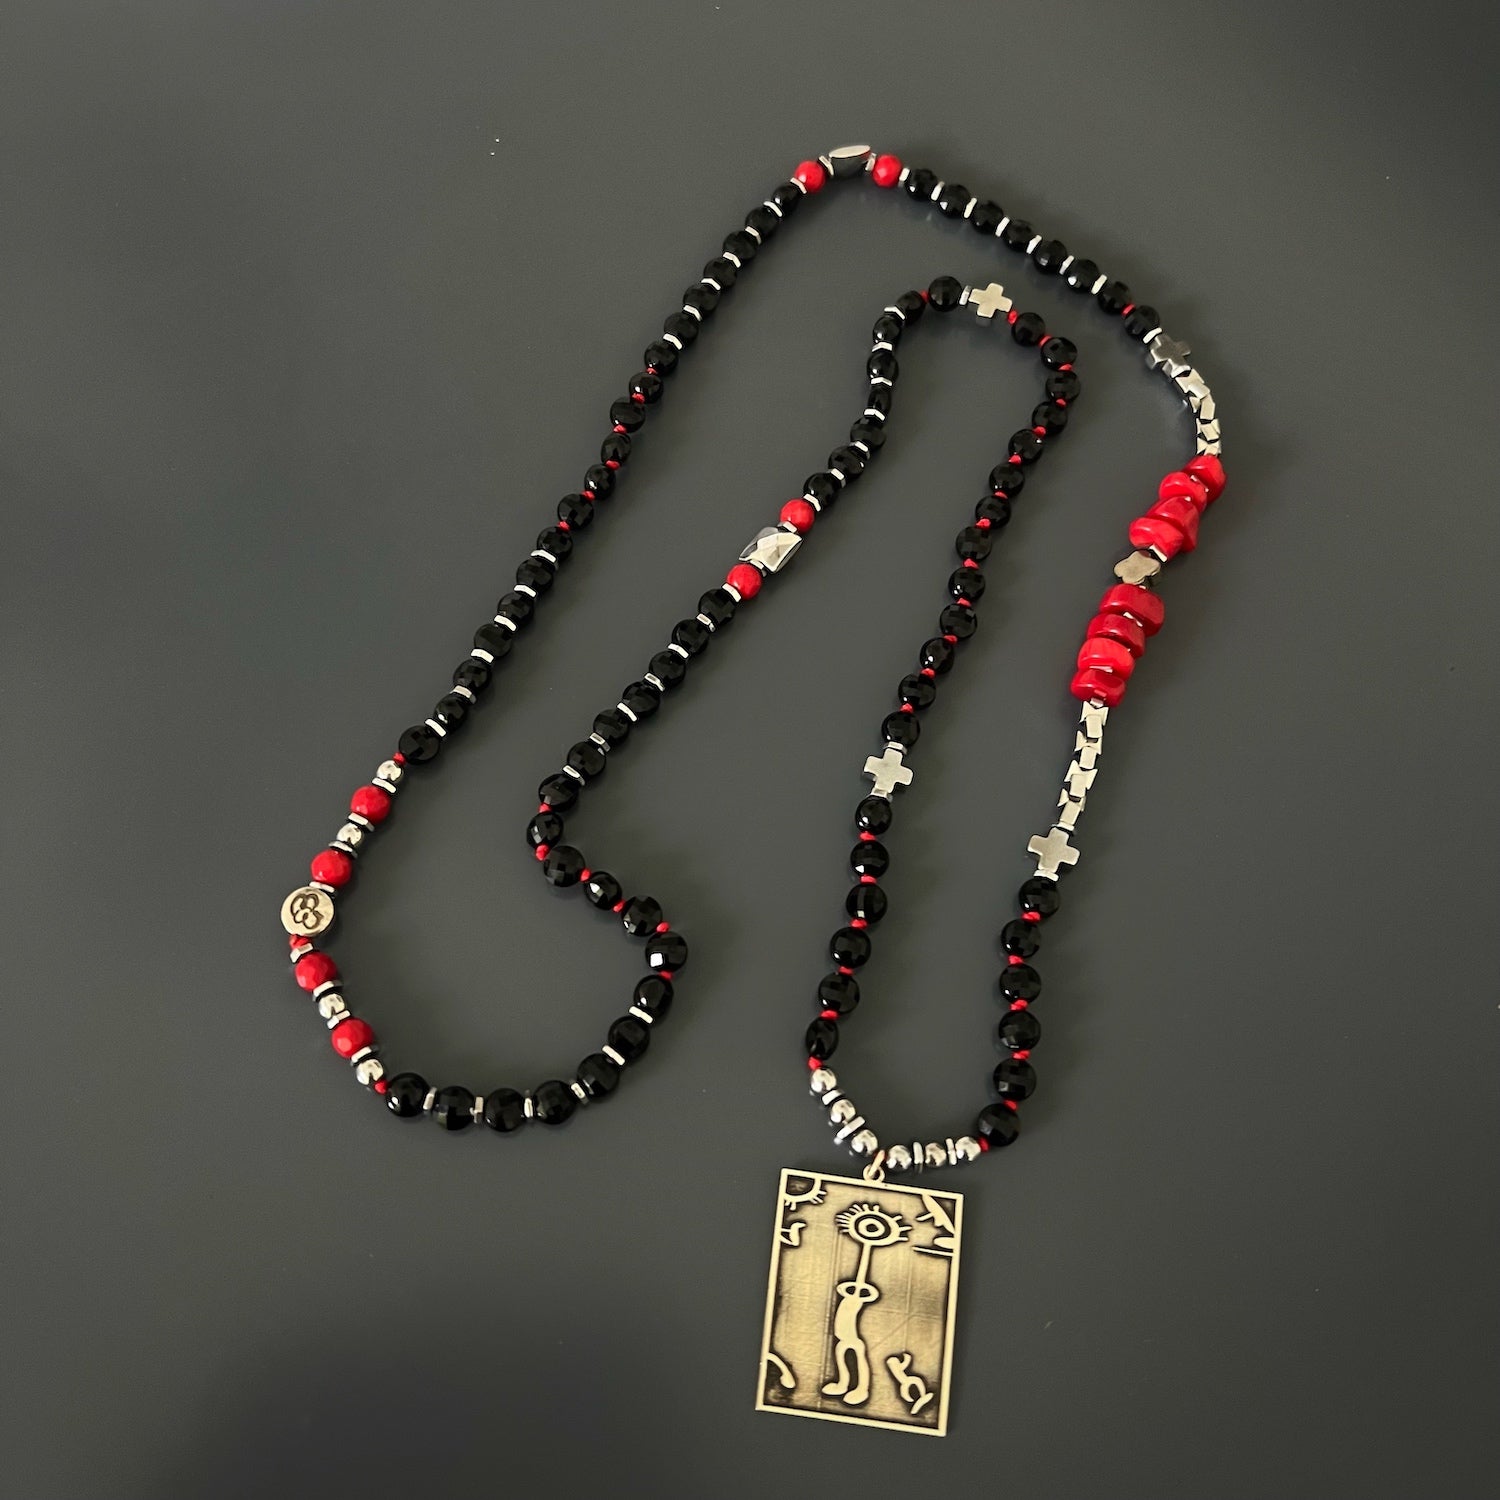 Shamanic Symbols Pendant Necklace - Embody the power of the spiritual realm.